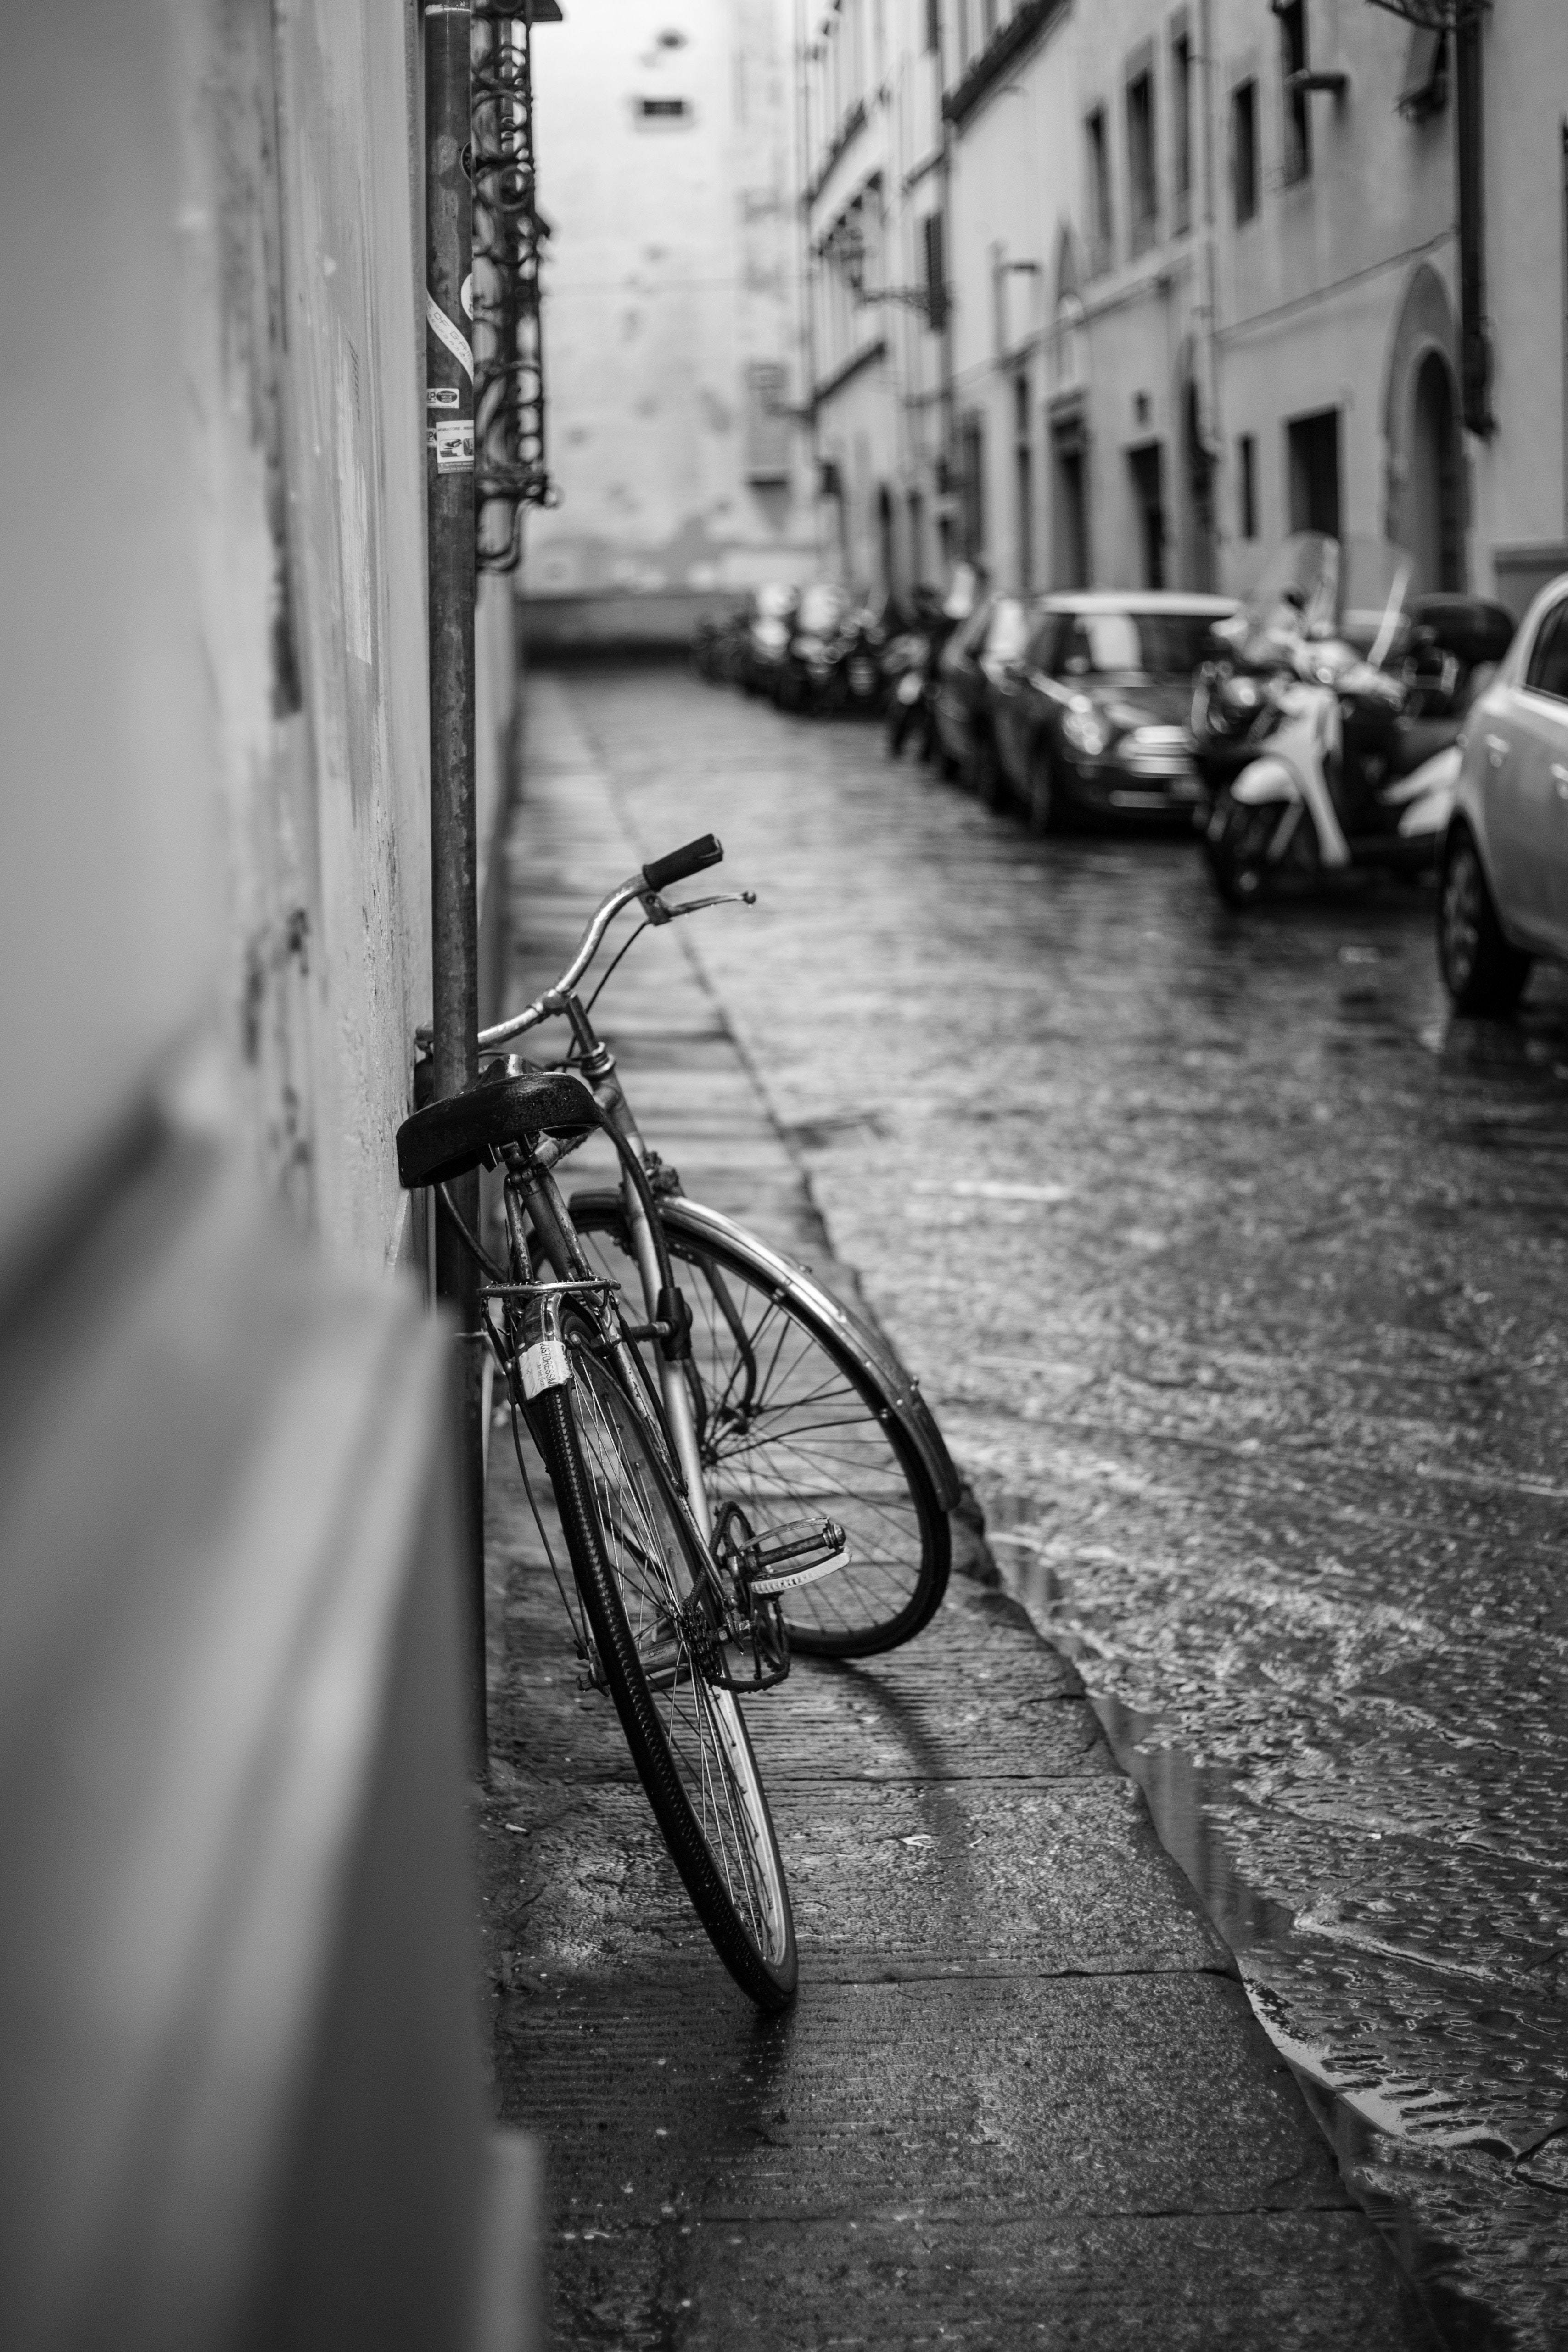 Bike on rainy street